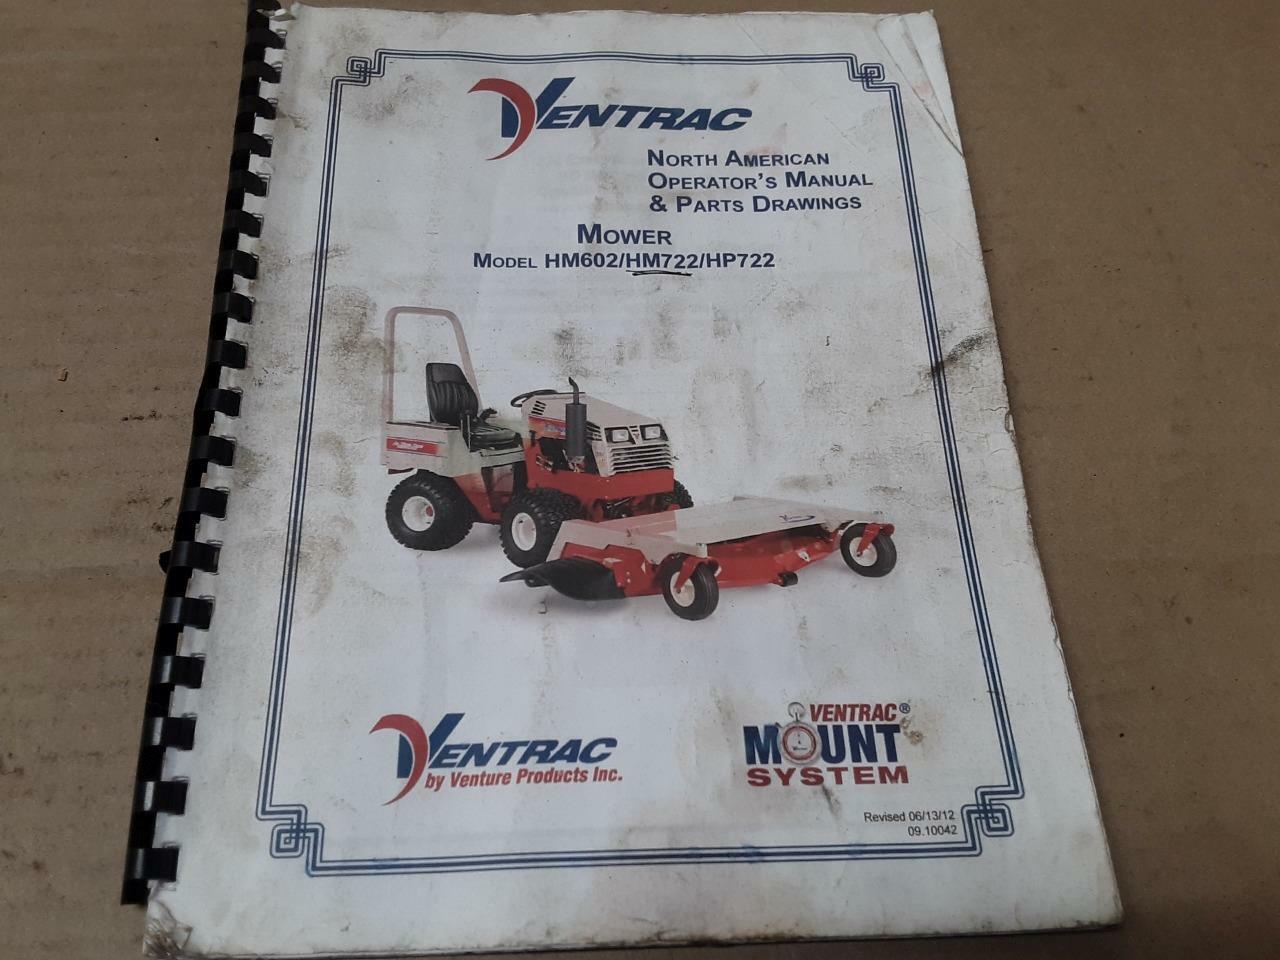 Ventrac Printed Operator's Manual Mower Model HM602 HM722 HP722 ***No Parts***